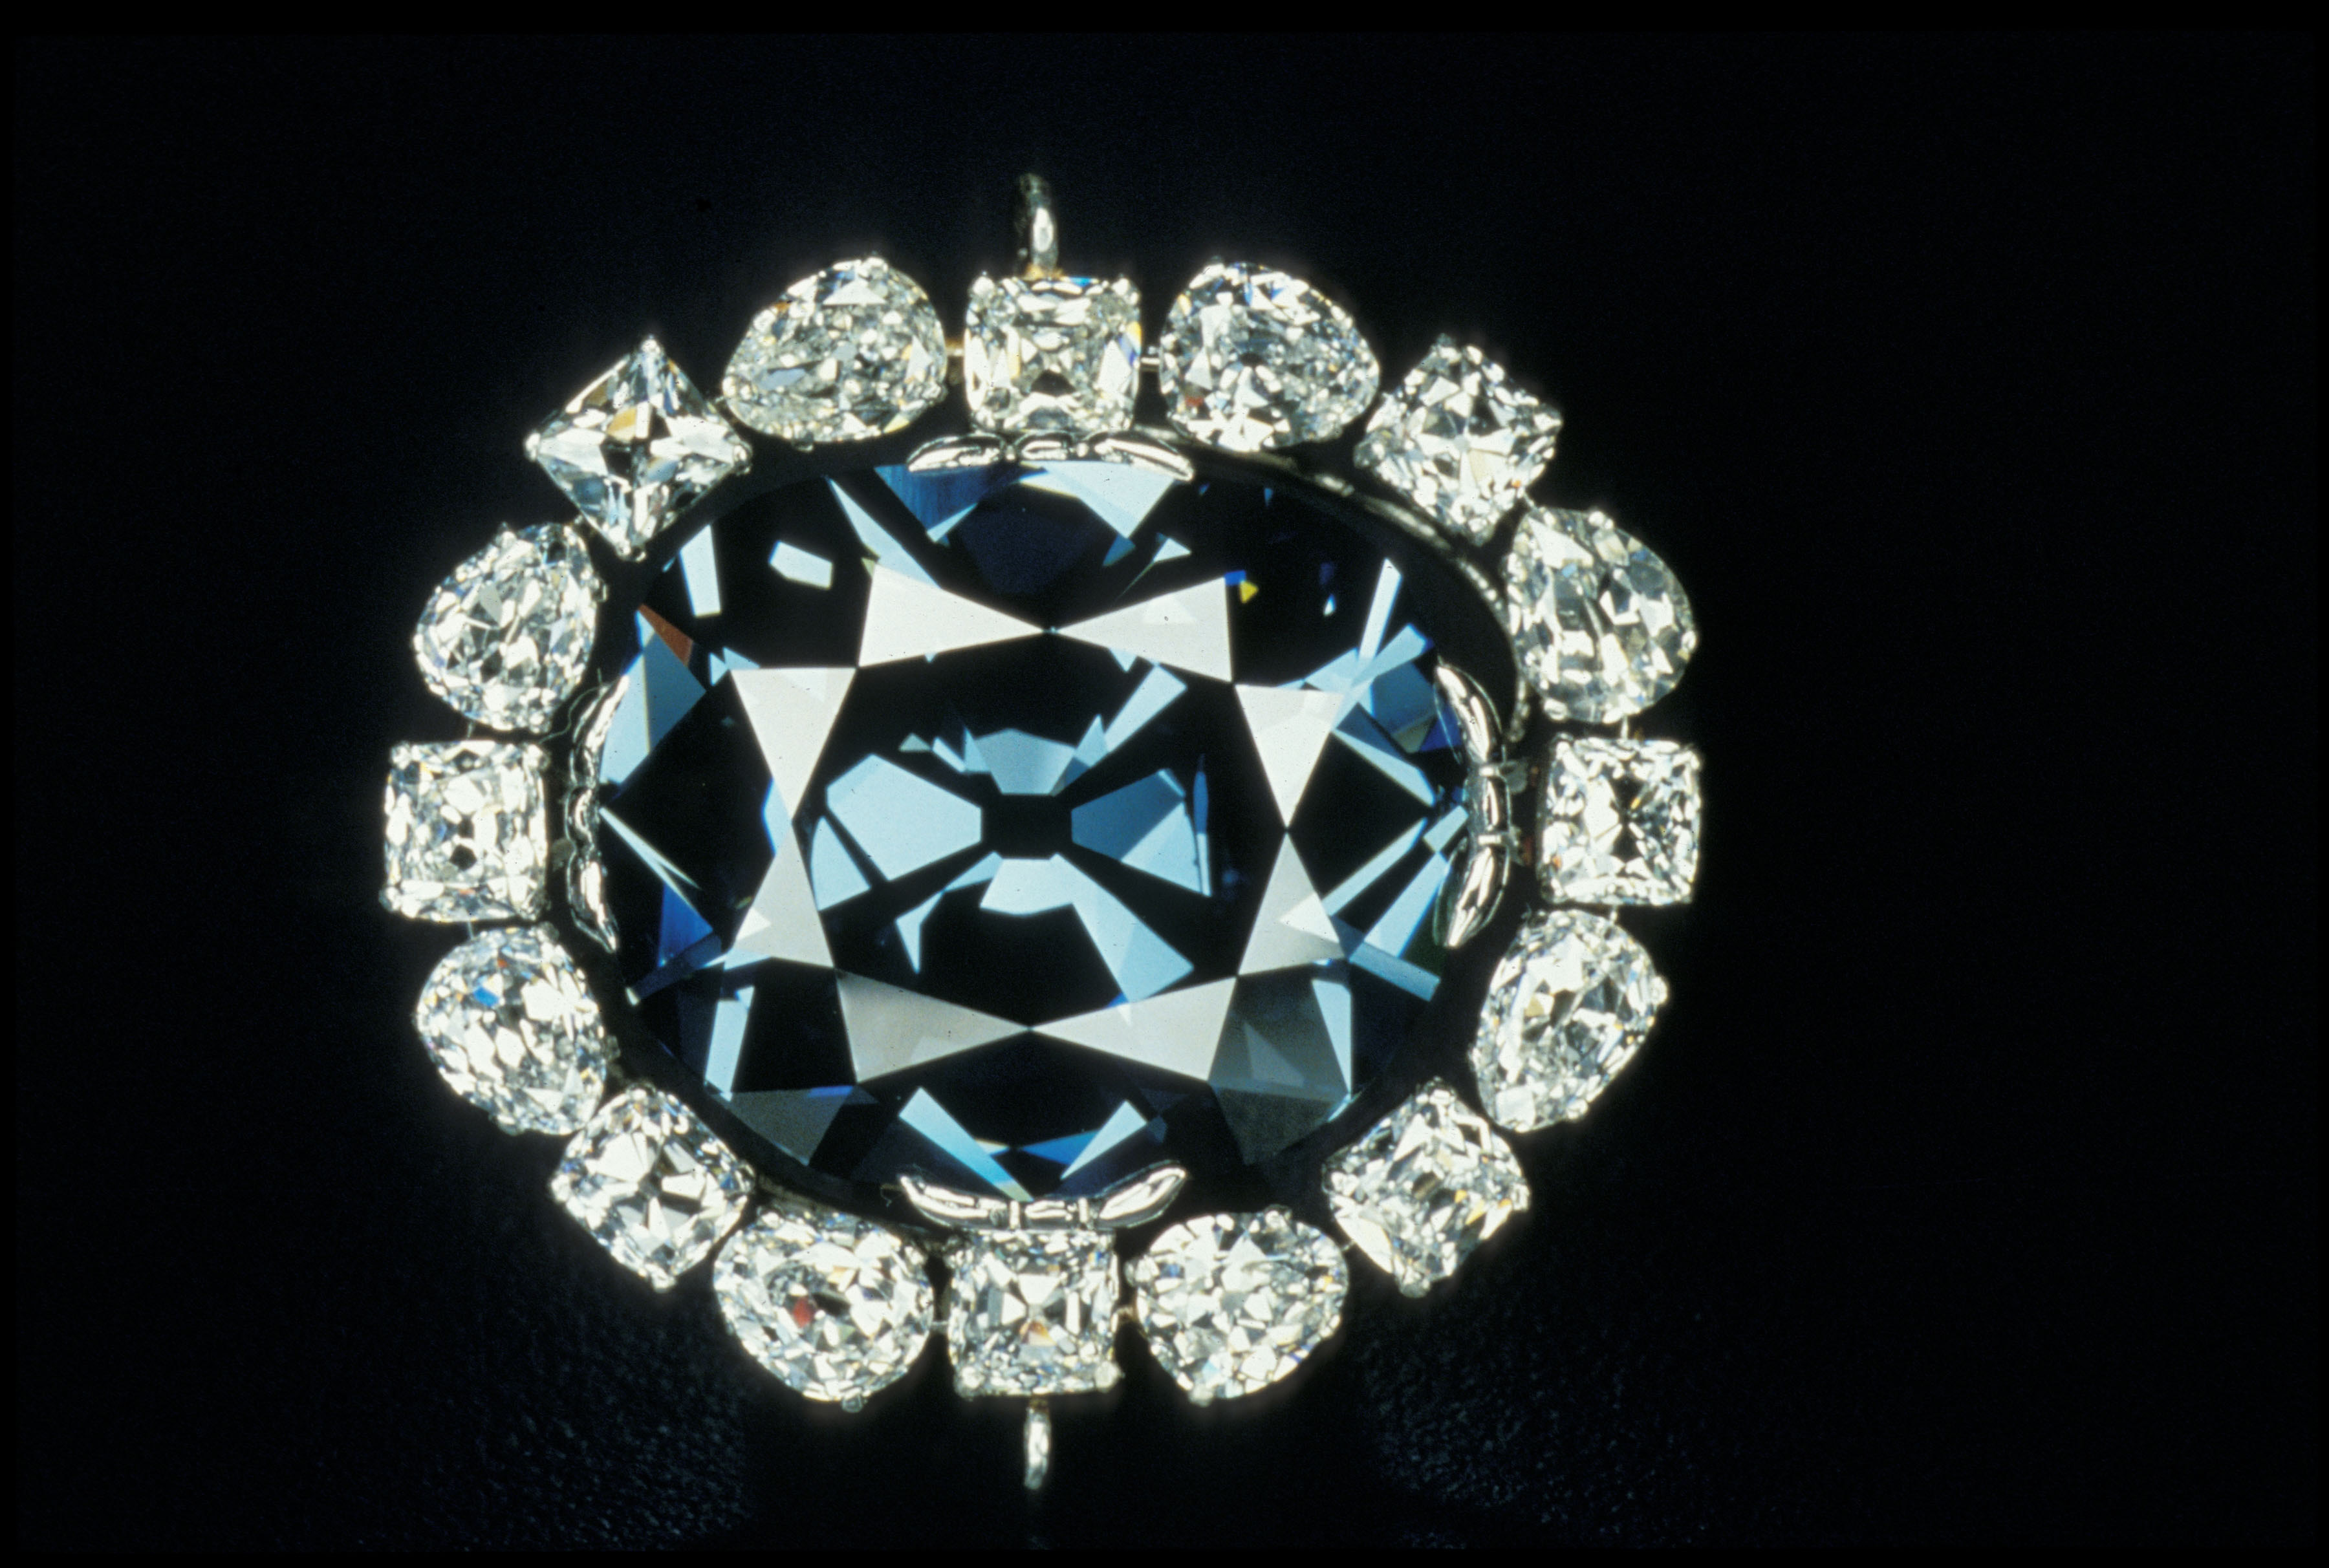 Gallery - Hope Diamond - Smithsonian Institution